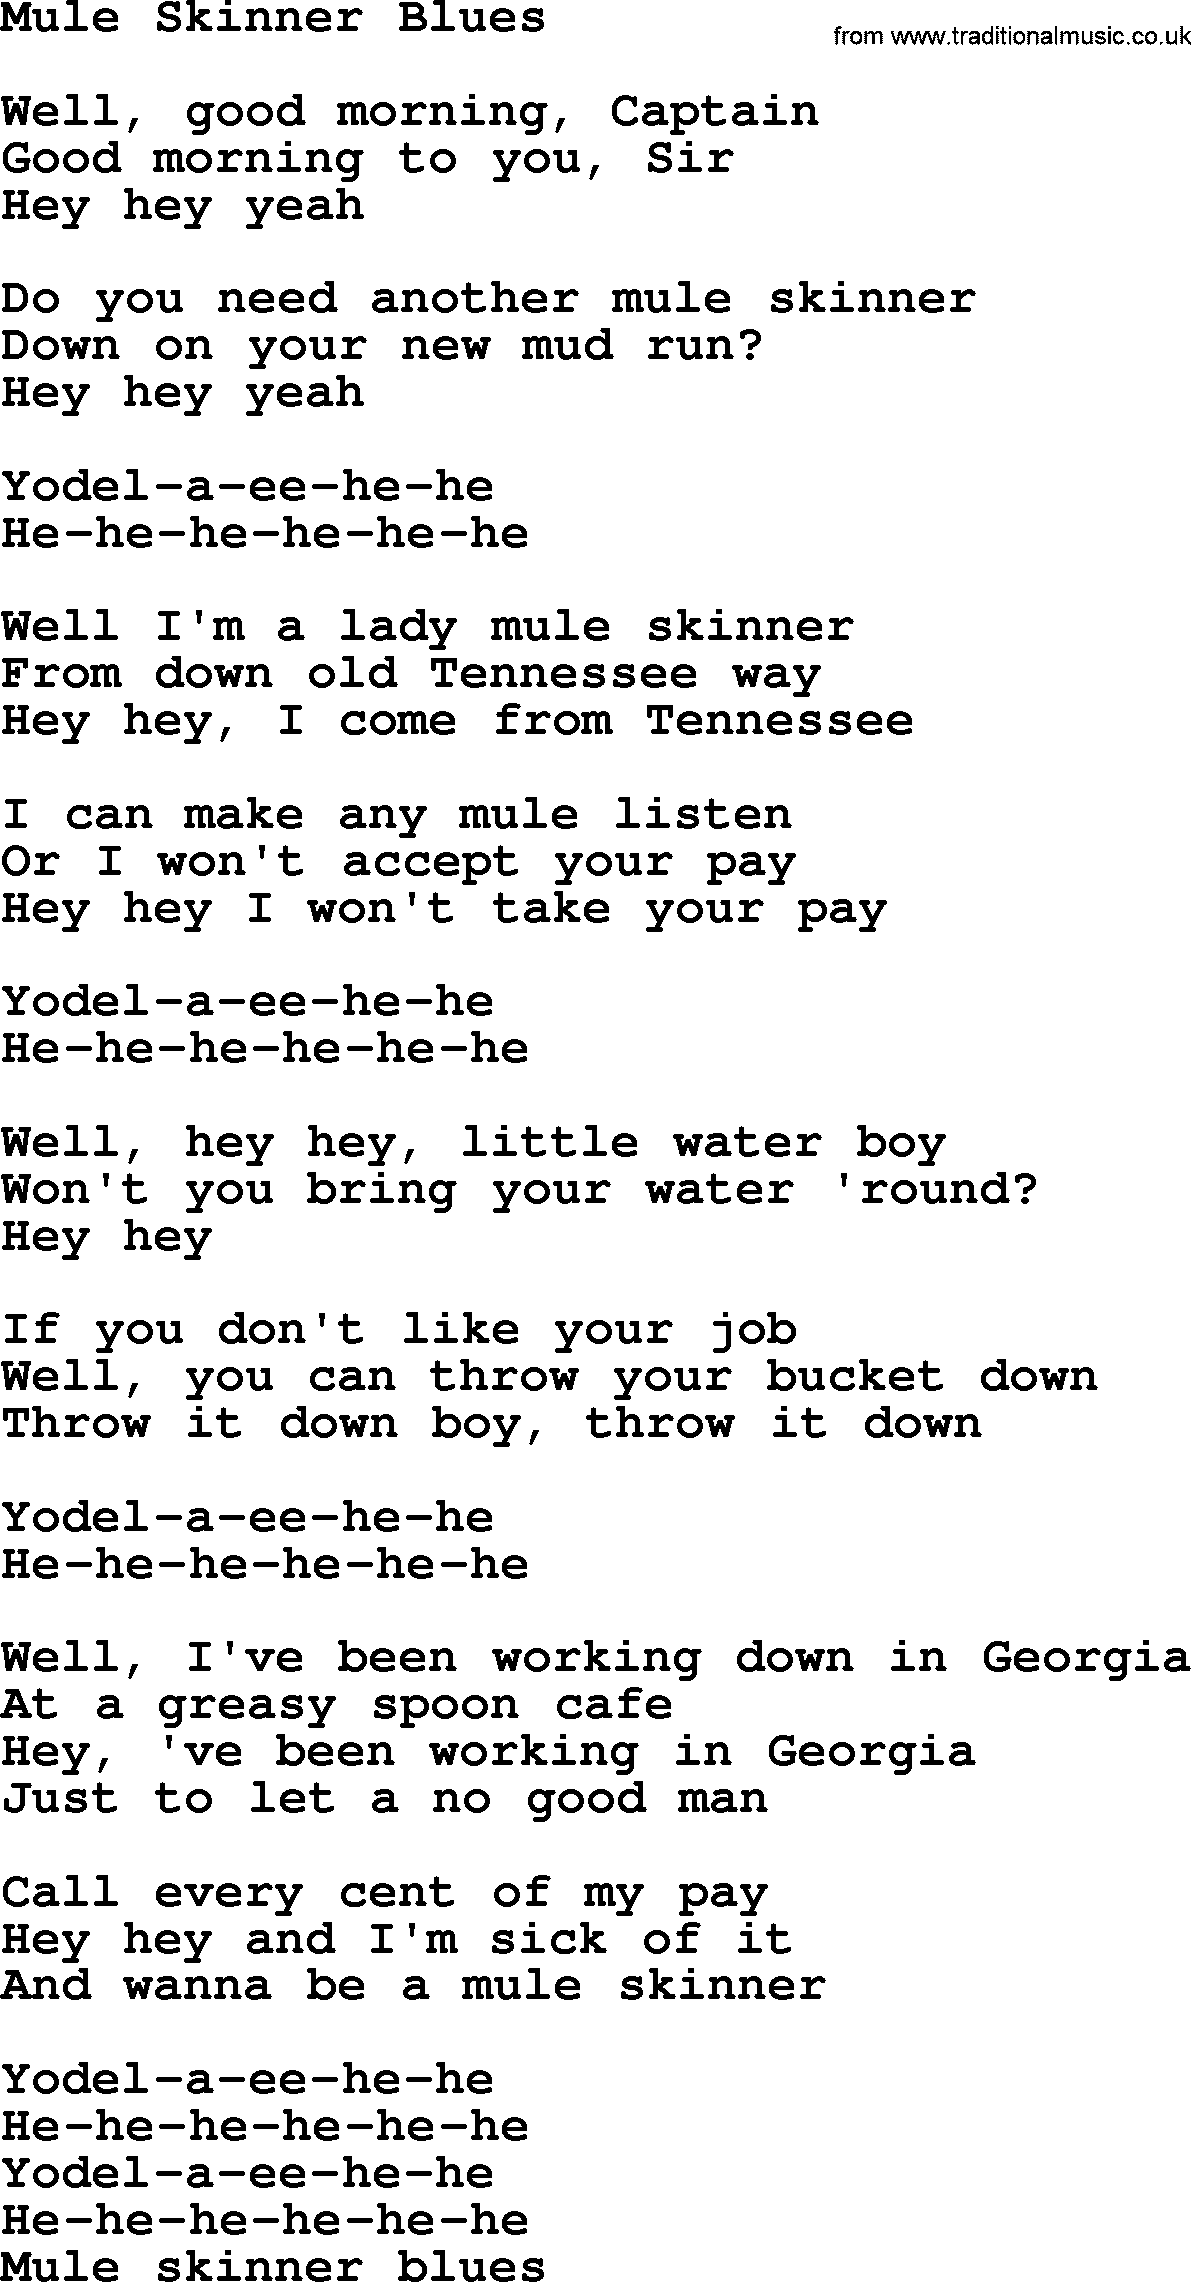 Dolly Parton song Mule Skinner Blues.txt lyrics